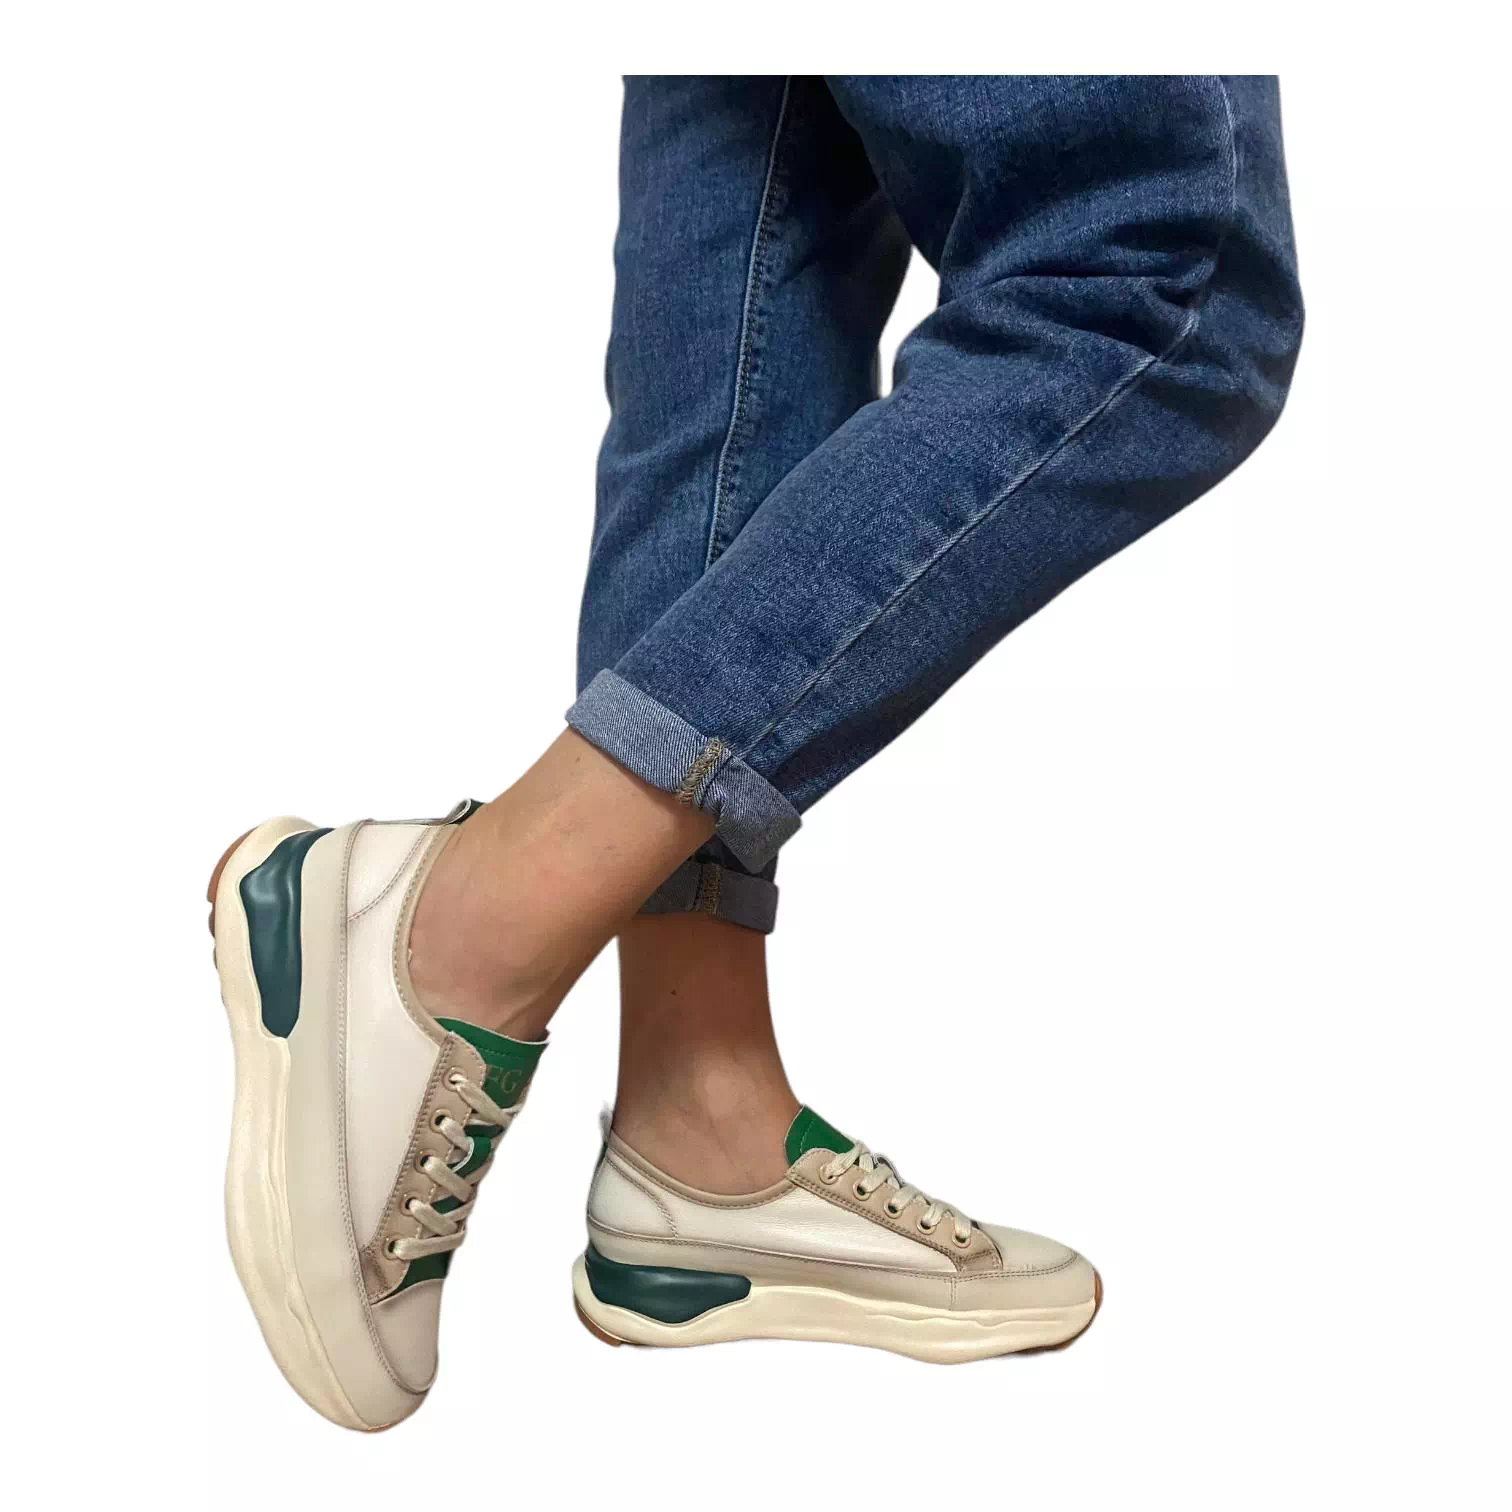 Pantofi albi cu talpa confort si detalii verzi